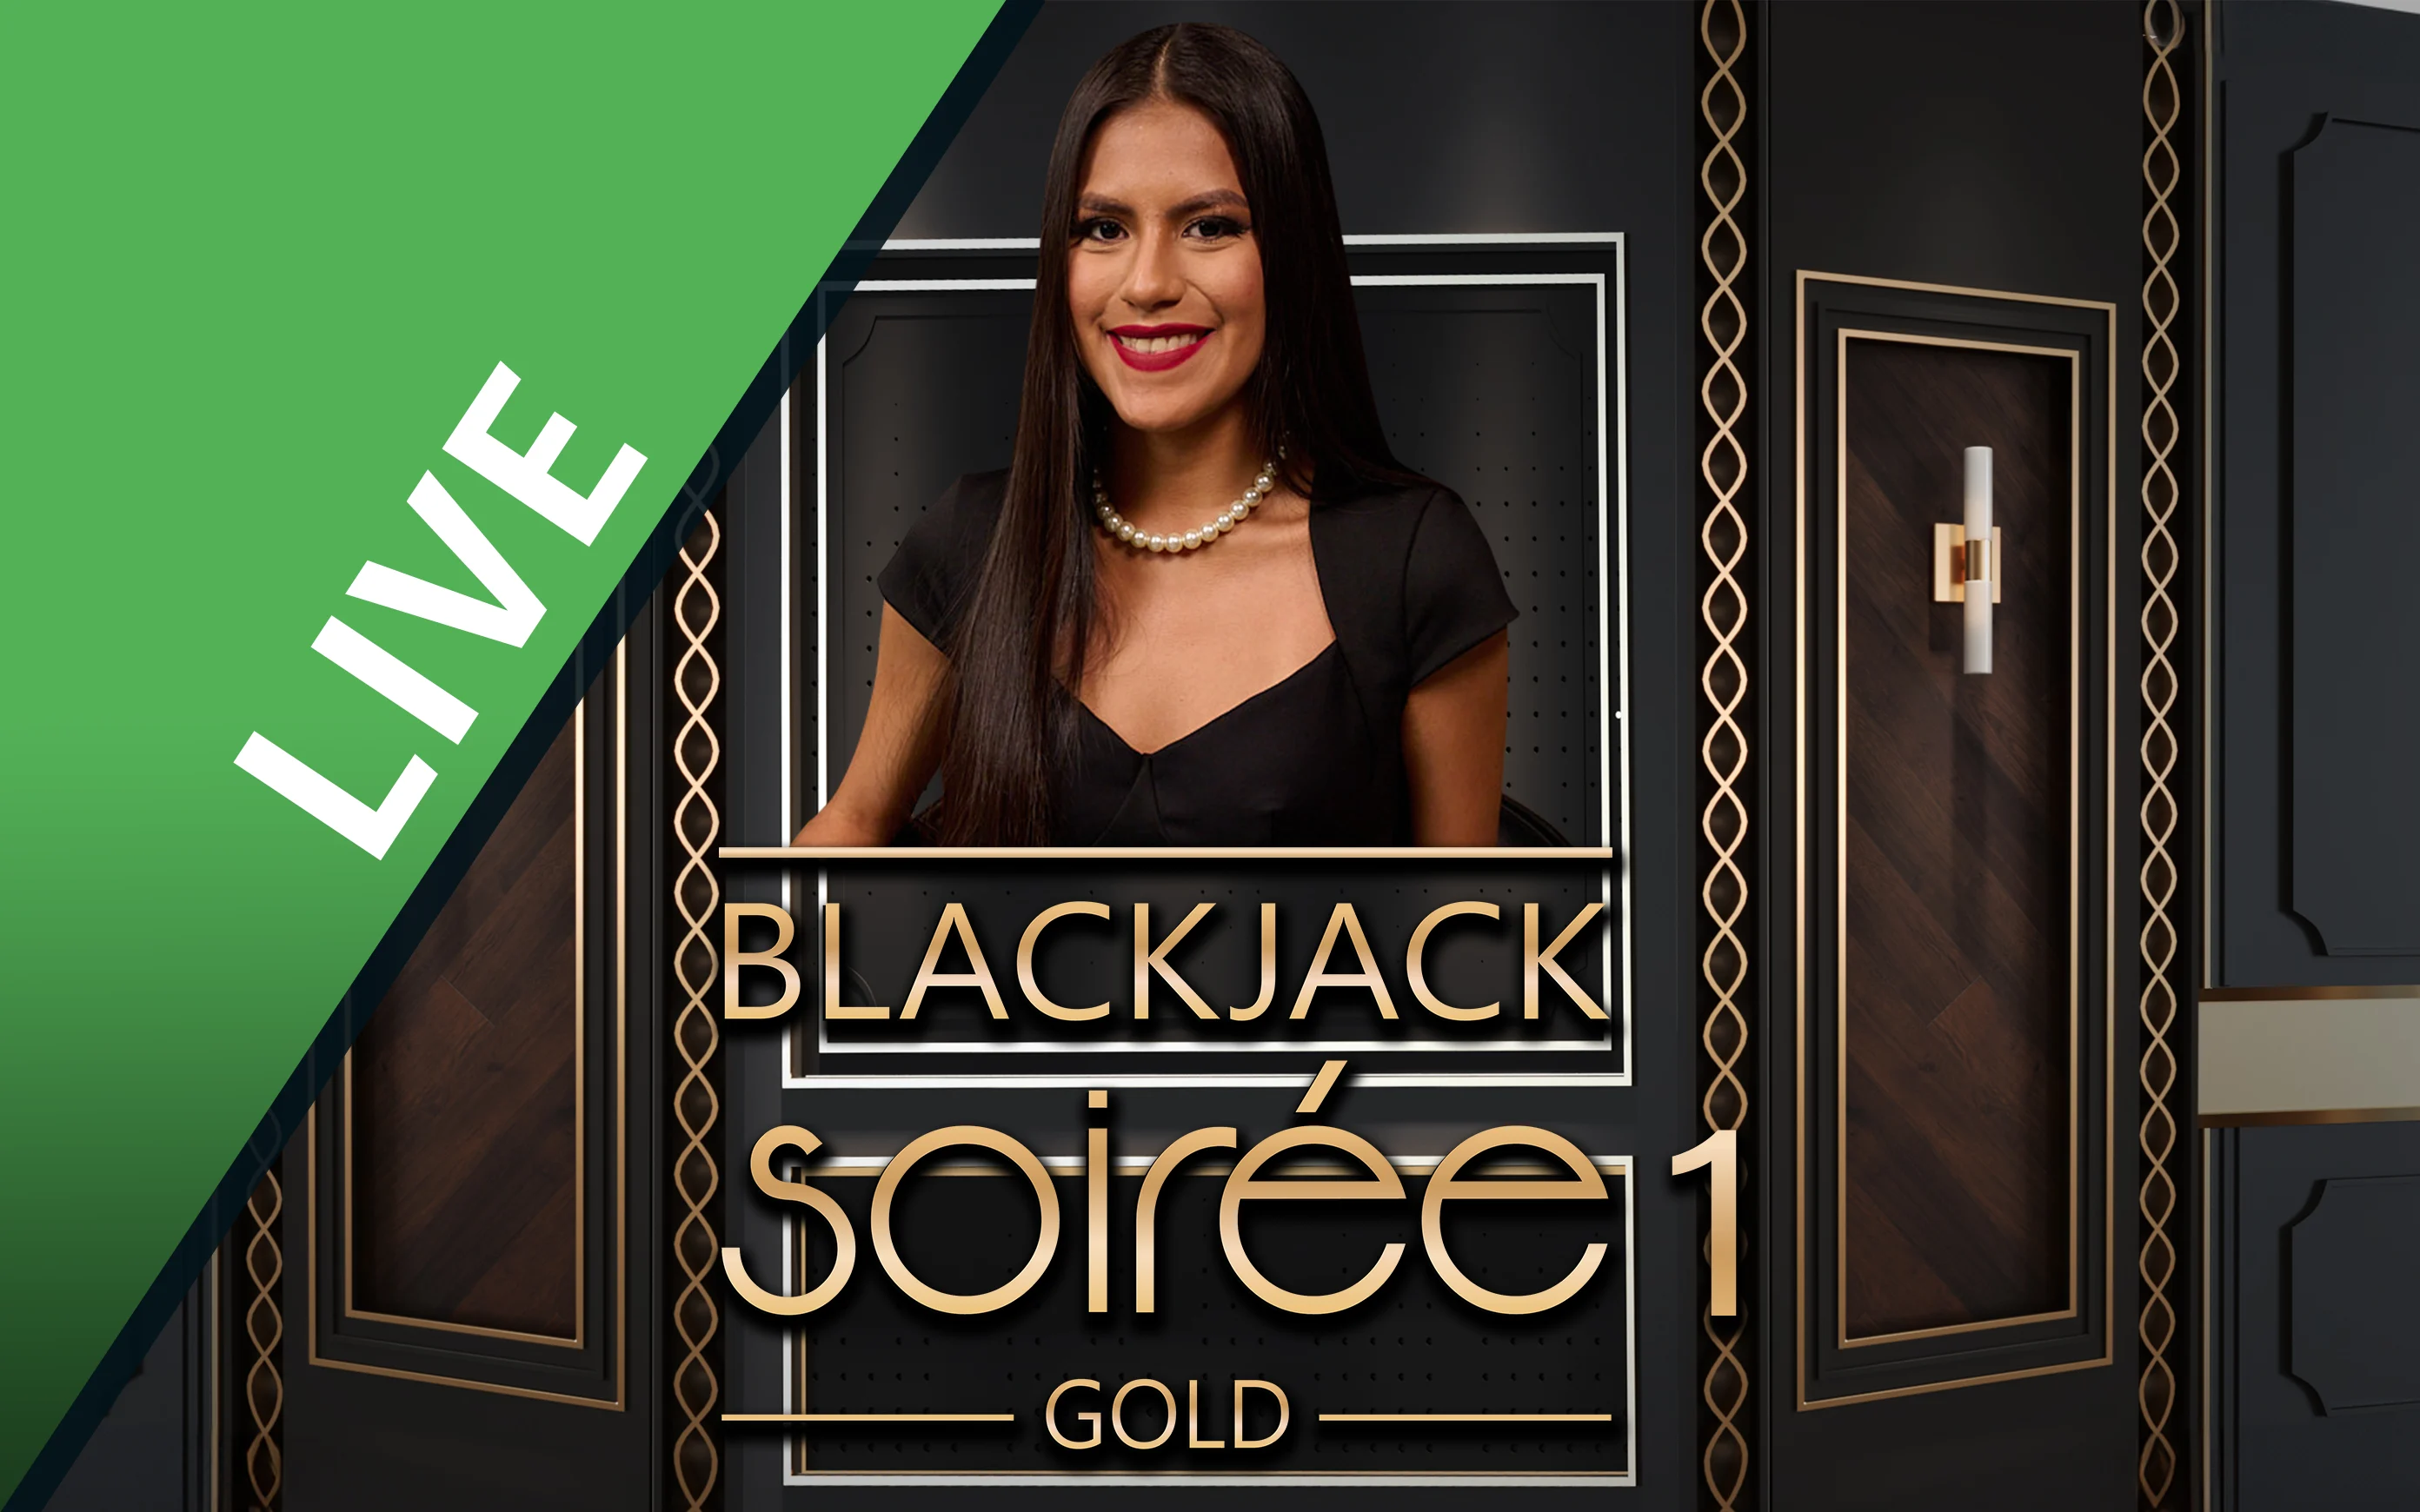 Jogue Blackjack Soirée Gold 1 no casino online Starcasino.be 